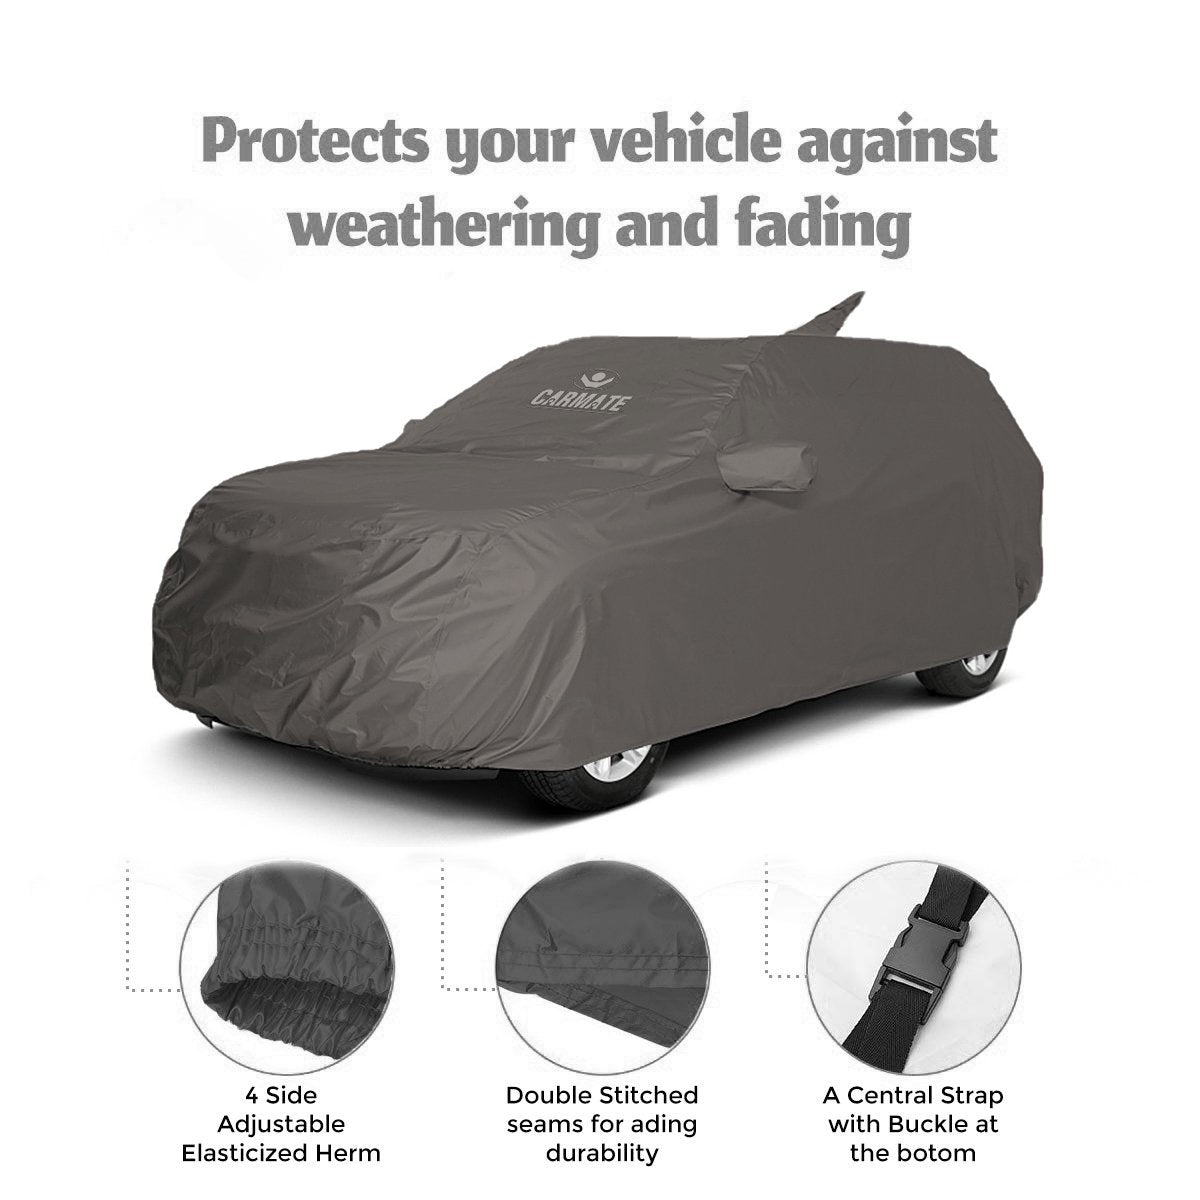 Carmate Car Body Cover 100% Waterproof Pride (Grey) for Datsun - Redigo - CARMATE®